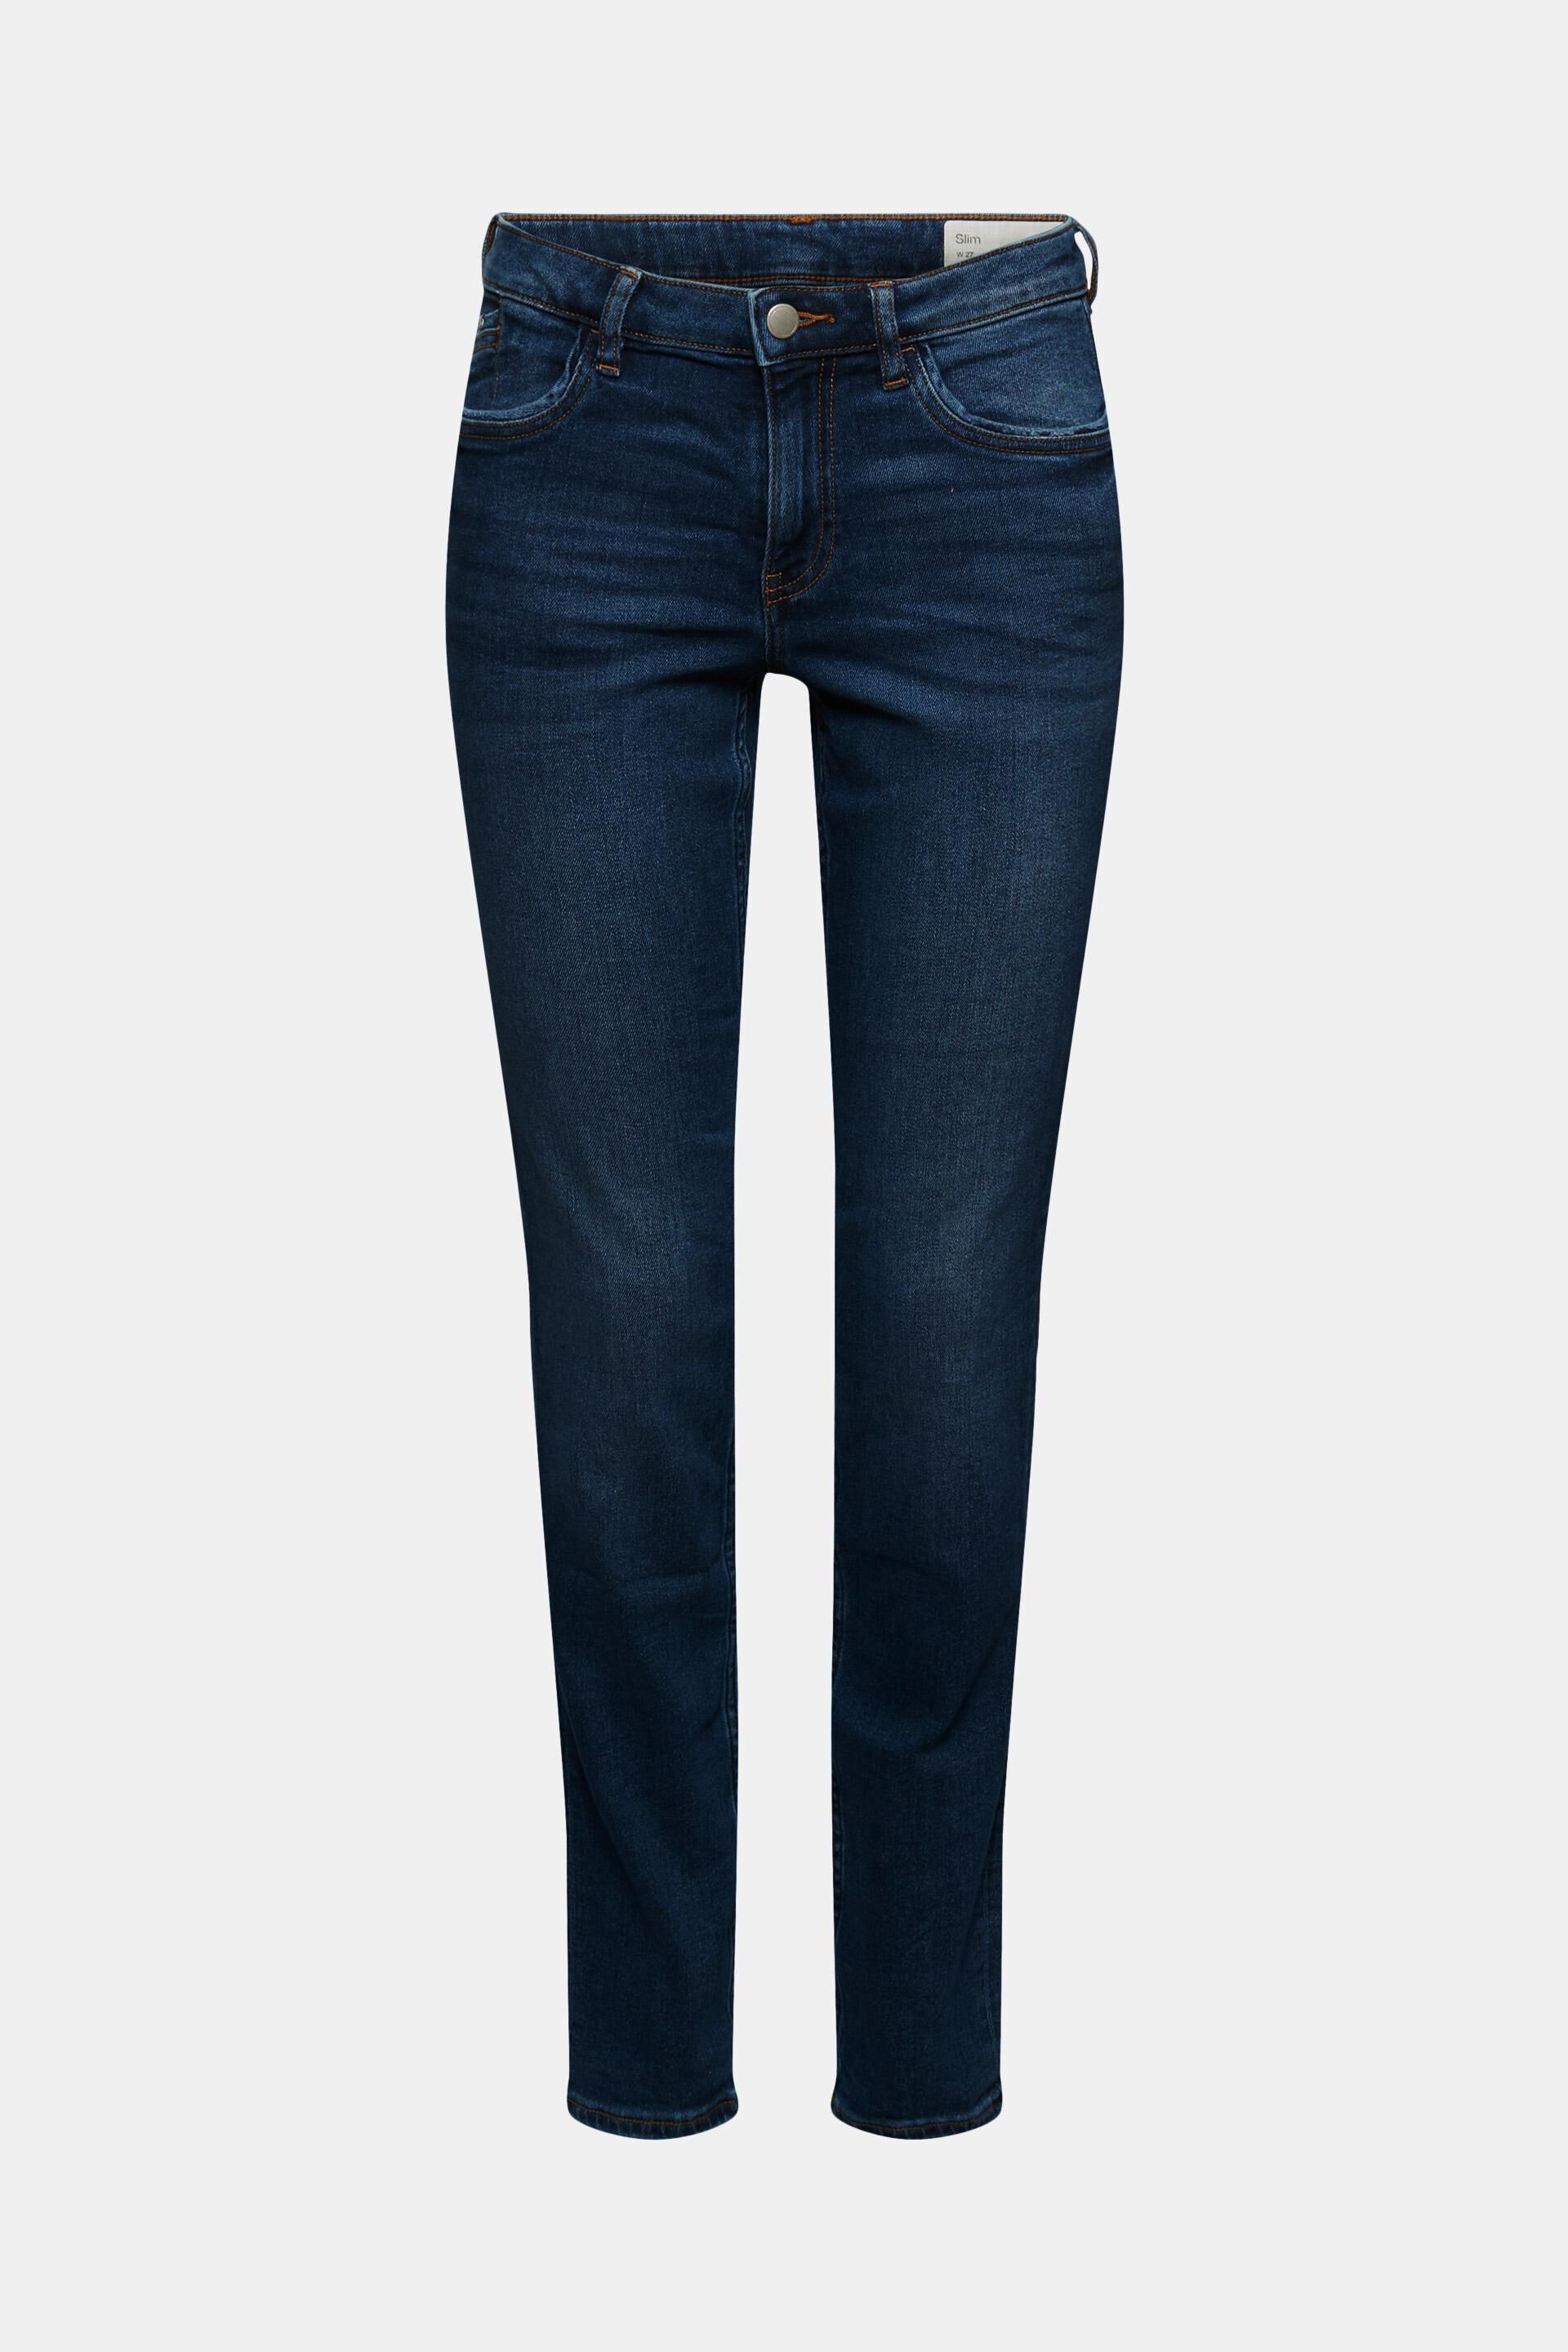 PAIGE Denim Skinny Jeans in het Blauw Dames Kleding voor voor Jeans voor Skinny jeans 